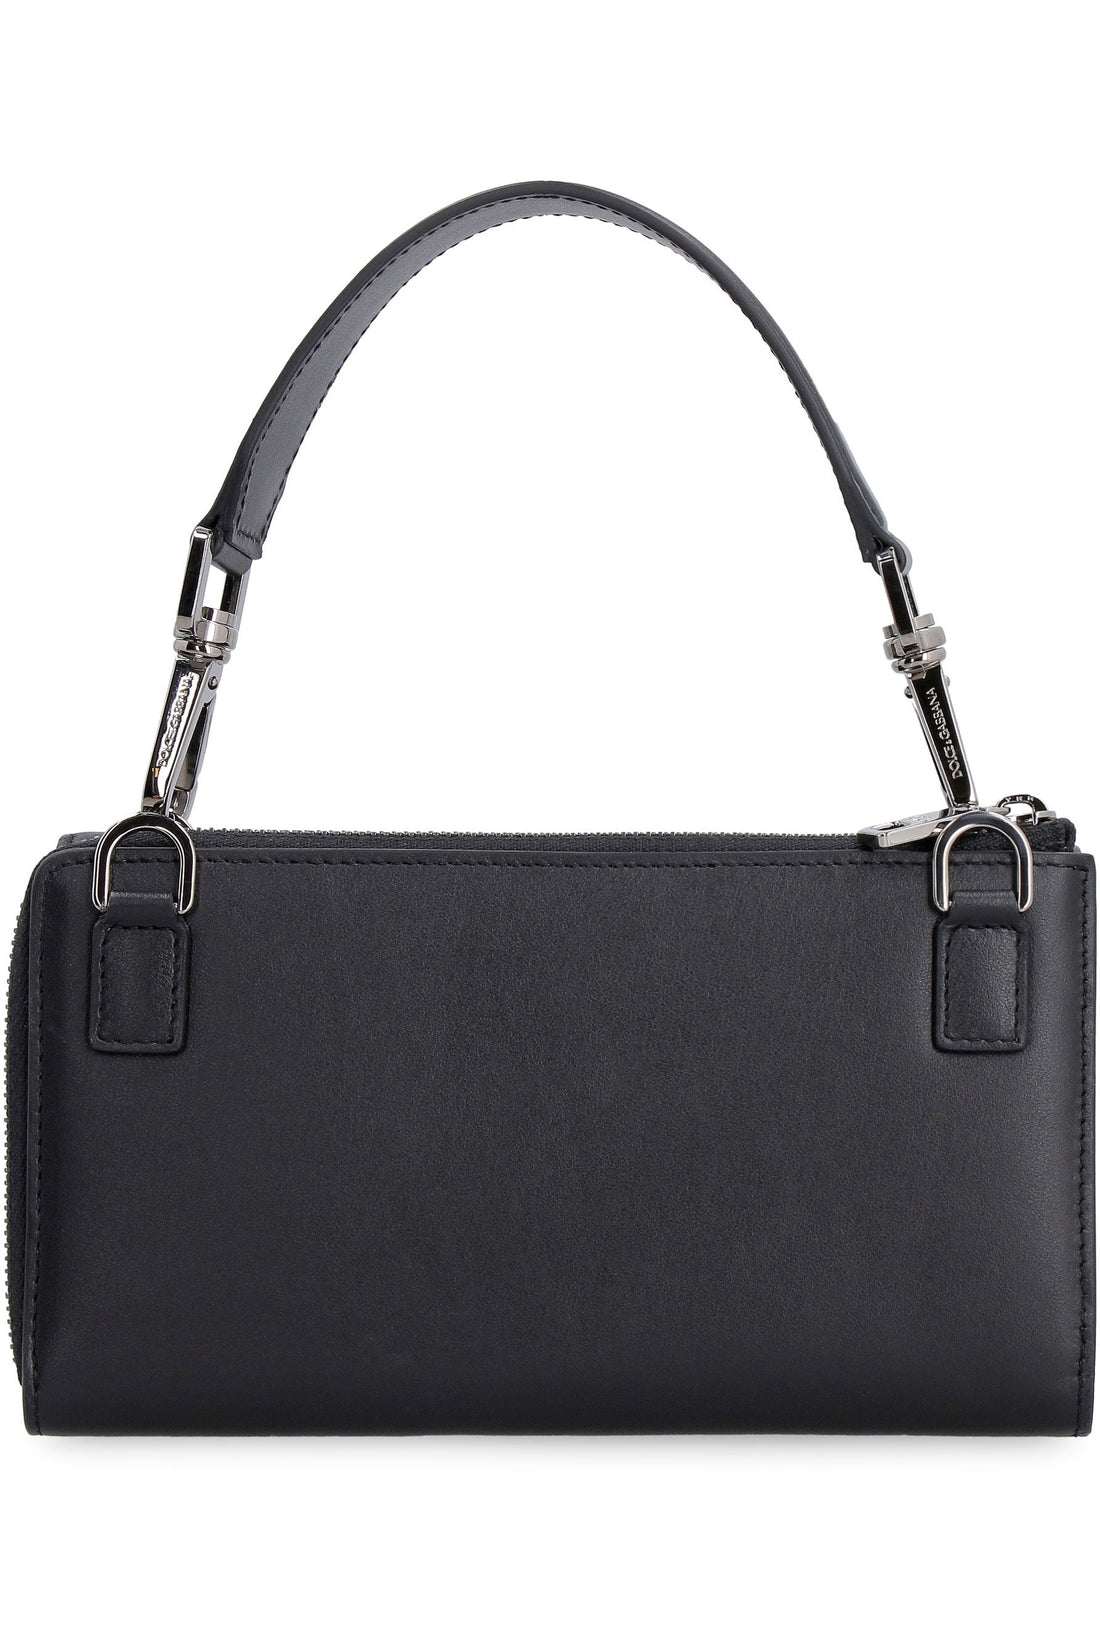 Dolce & Gabbana-OUTLET-SALE-Leather mini handbag-ARCHIVIST